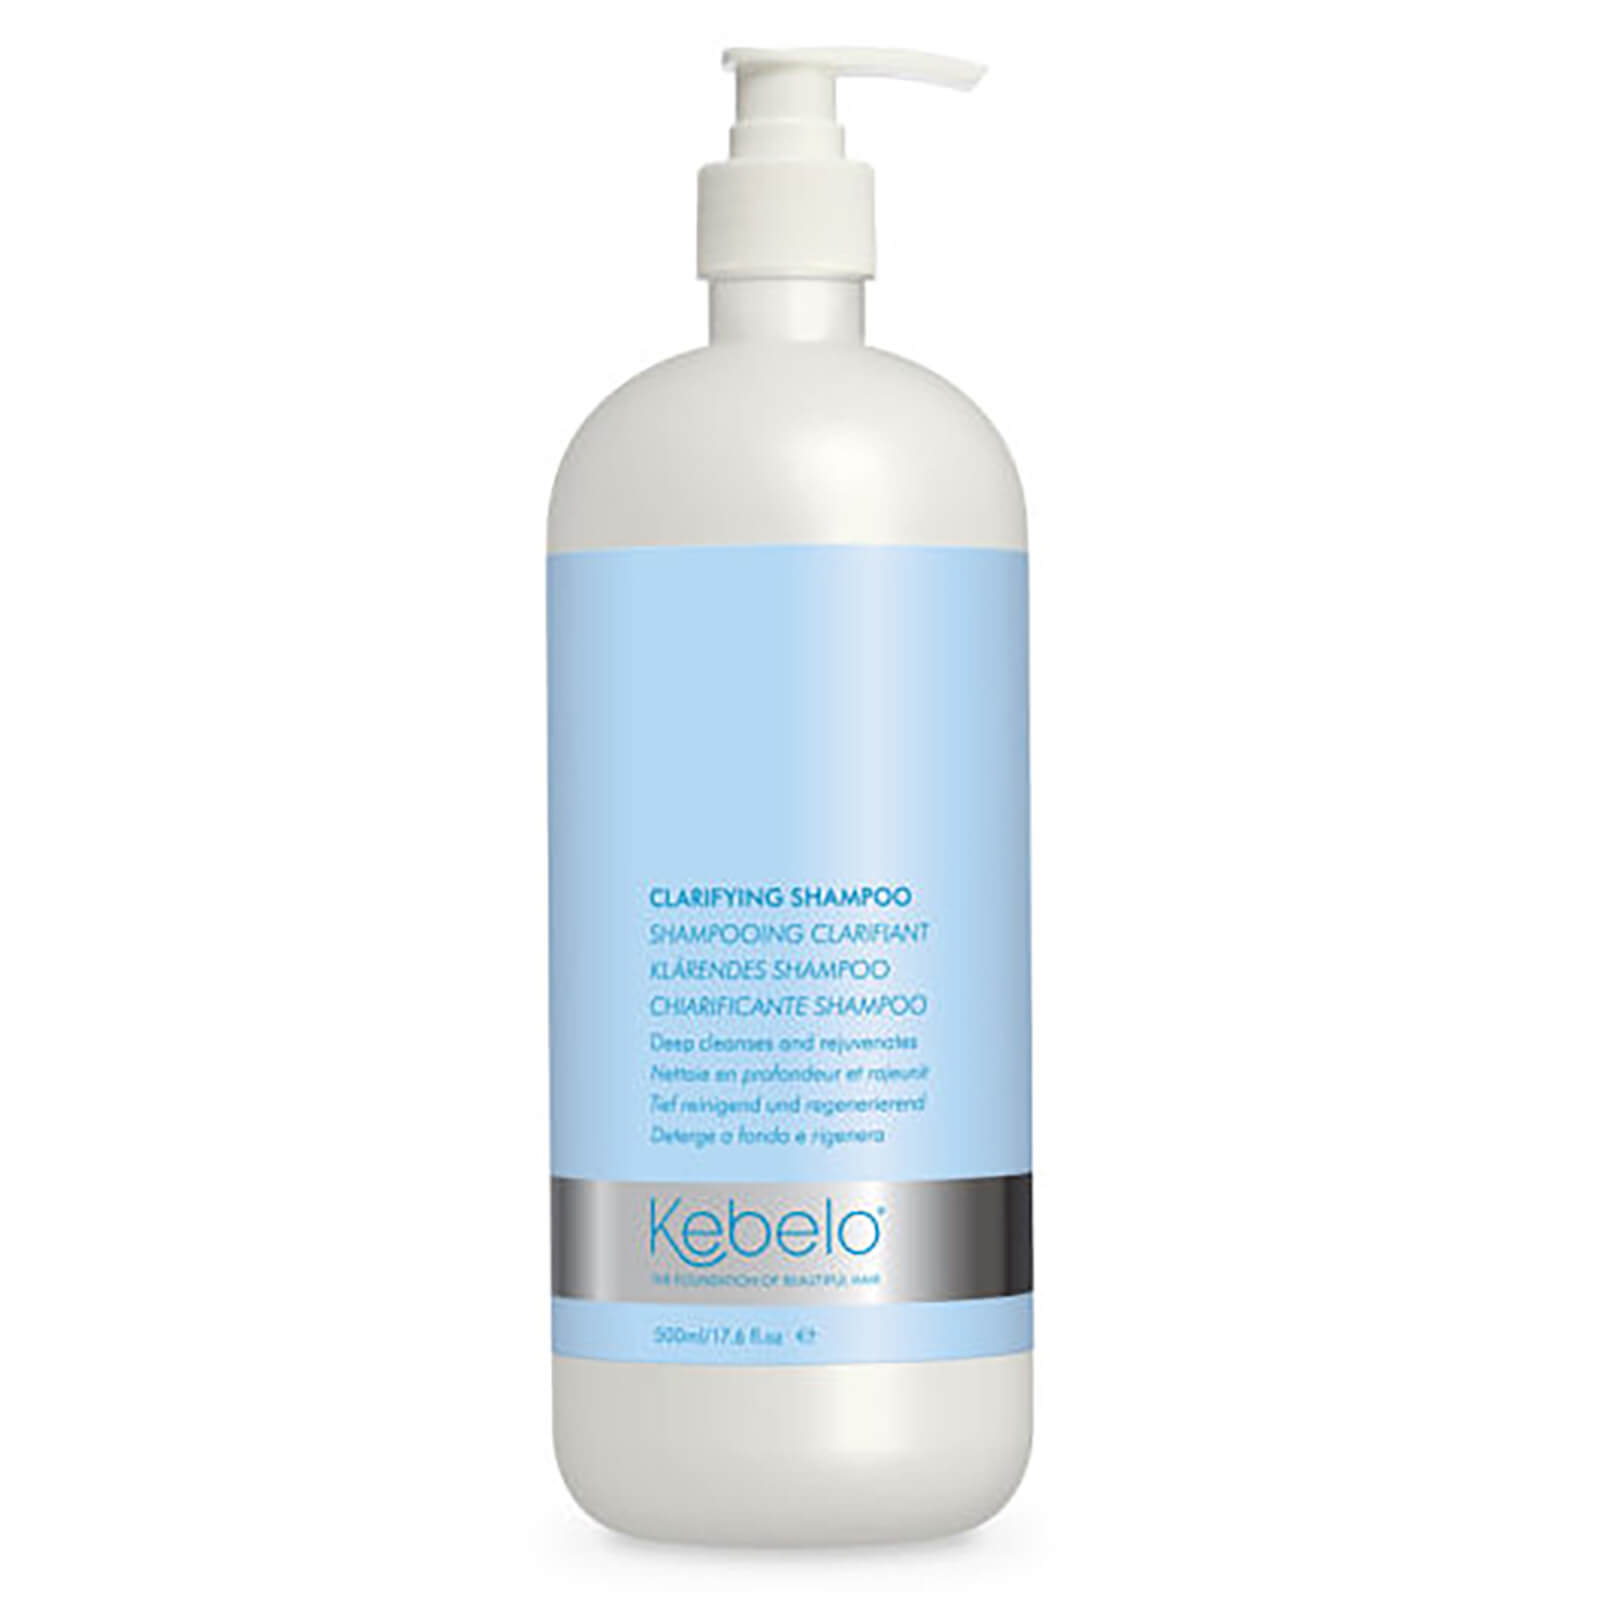 Kebelo Clarifying Shampoo (500 ml)